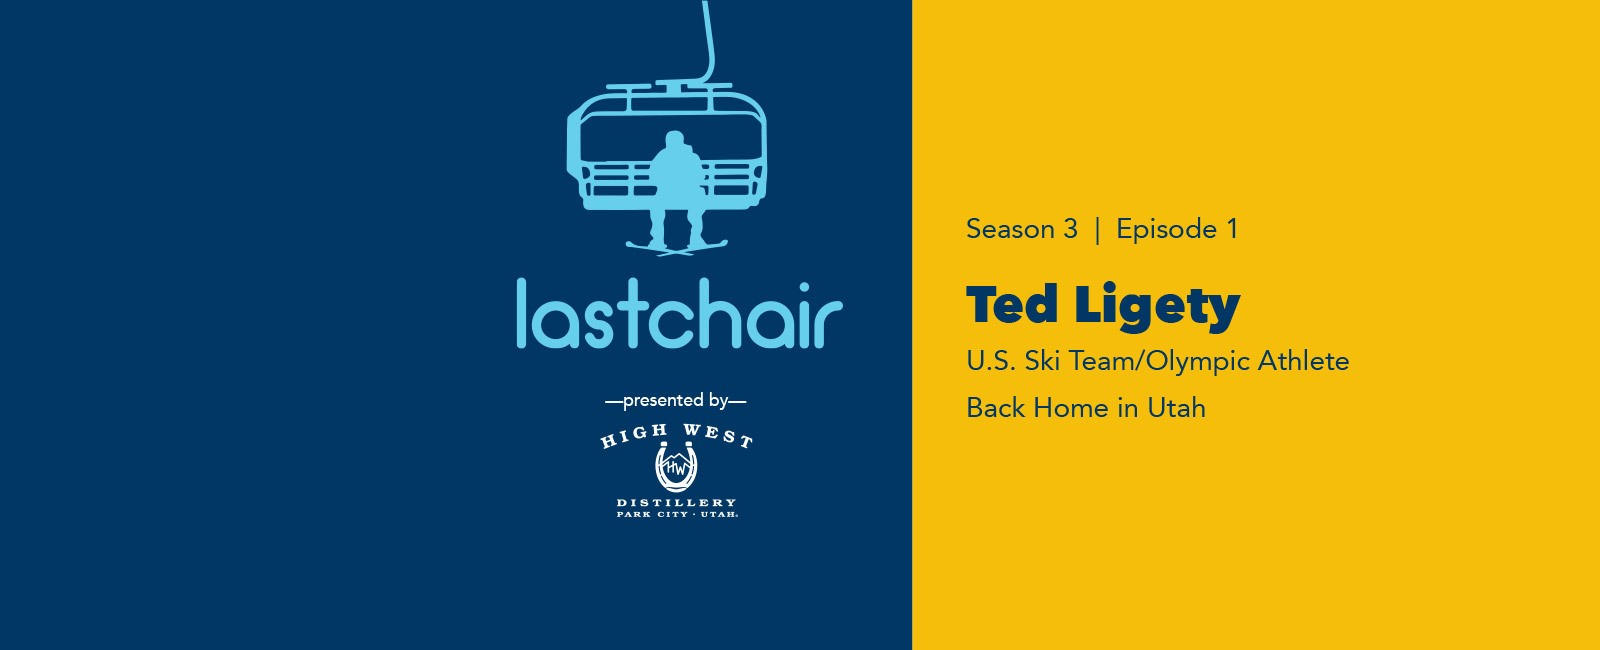 Ted Ligety: Back Home in Utah